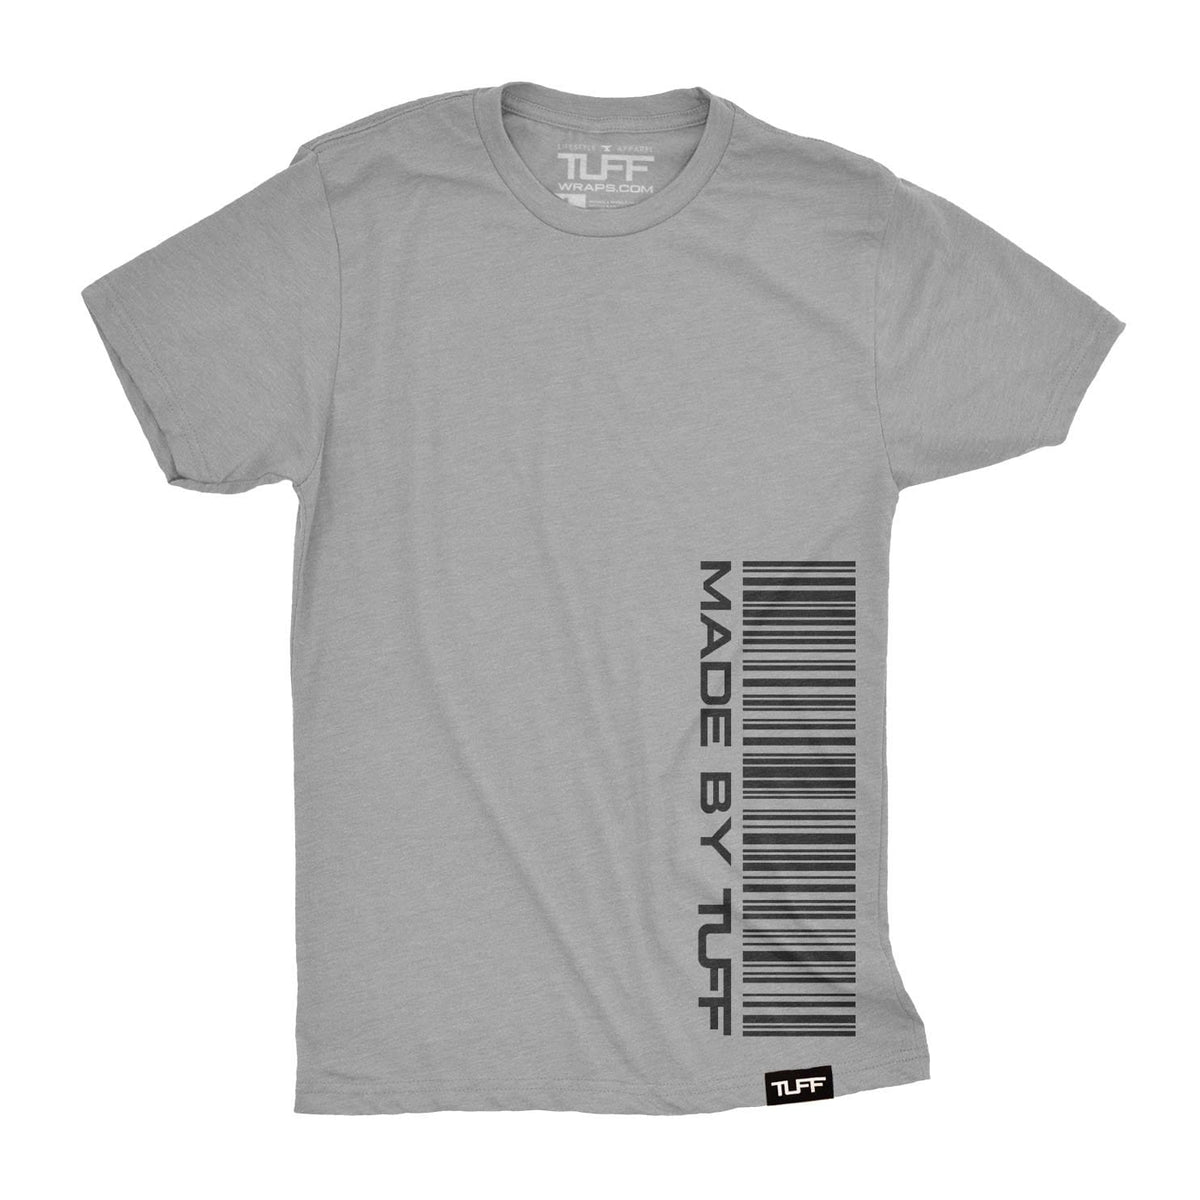 The Barcode Tee T-shirt